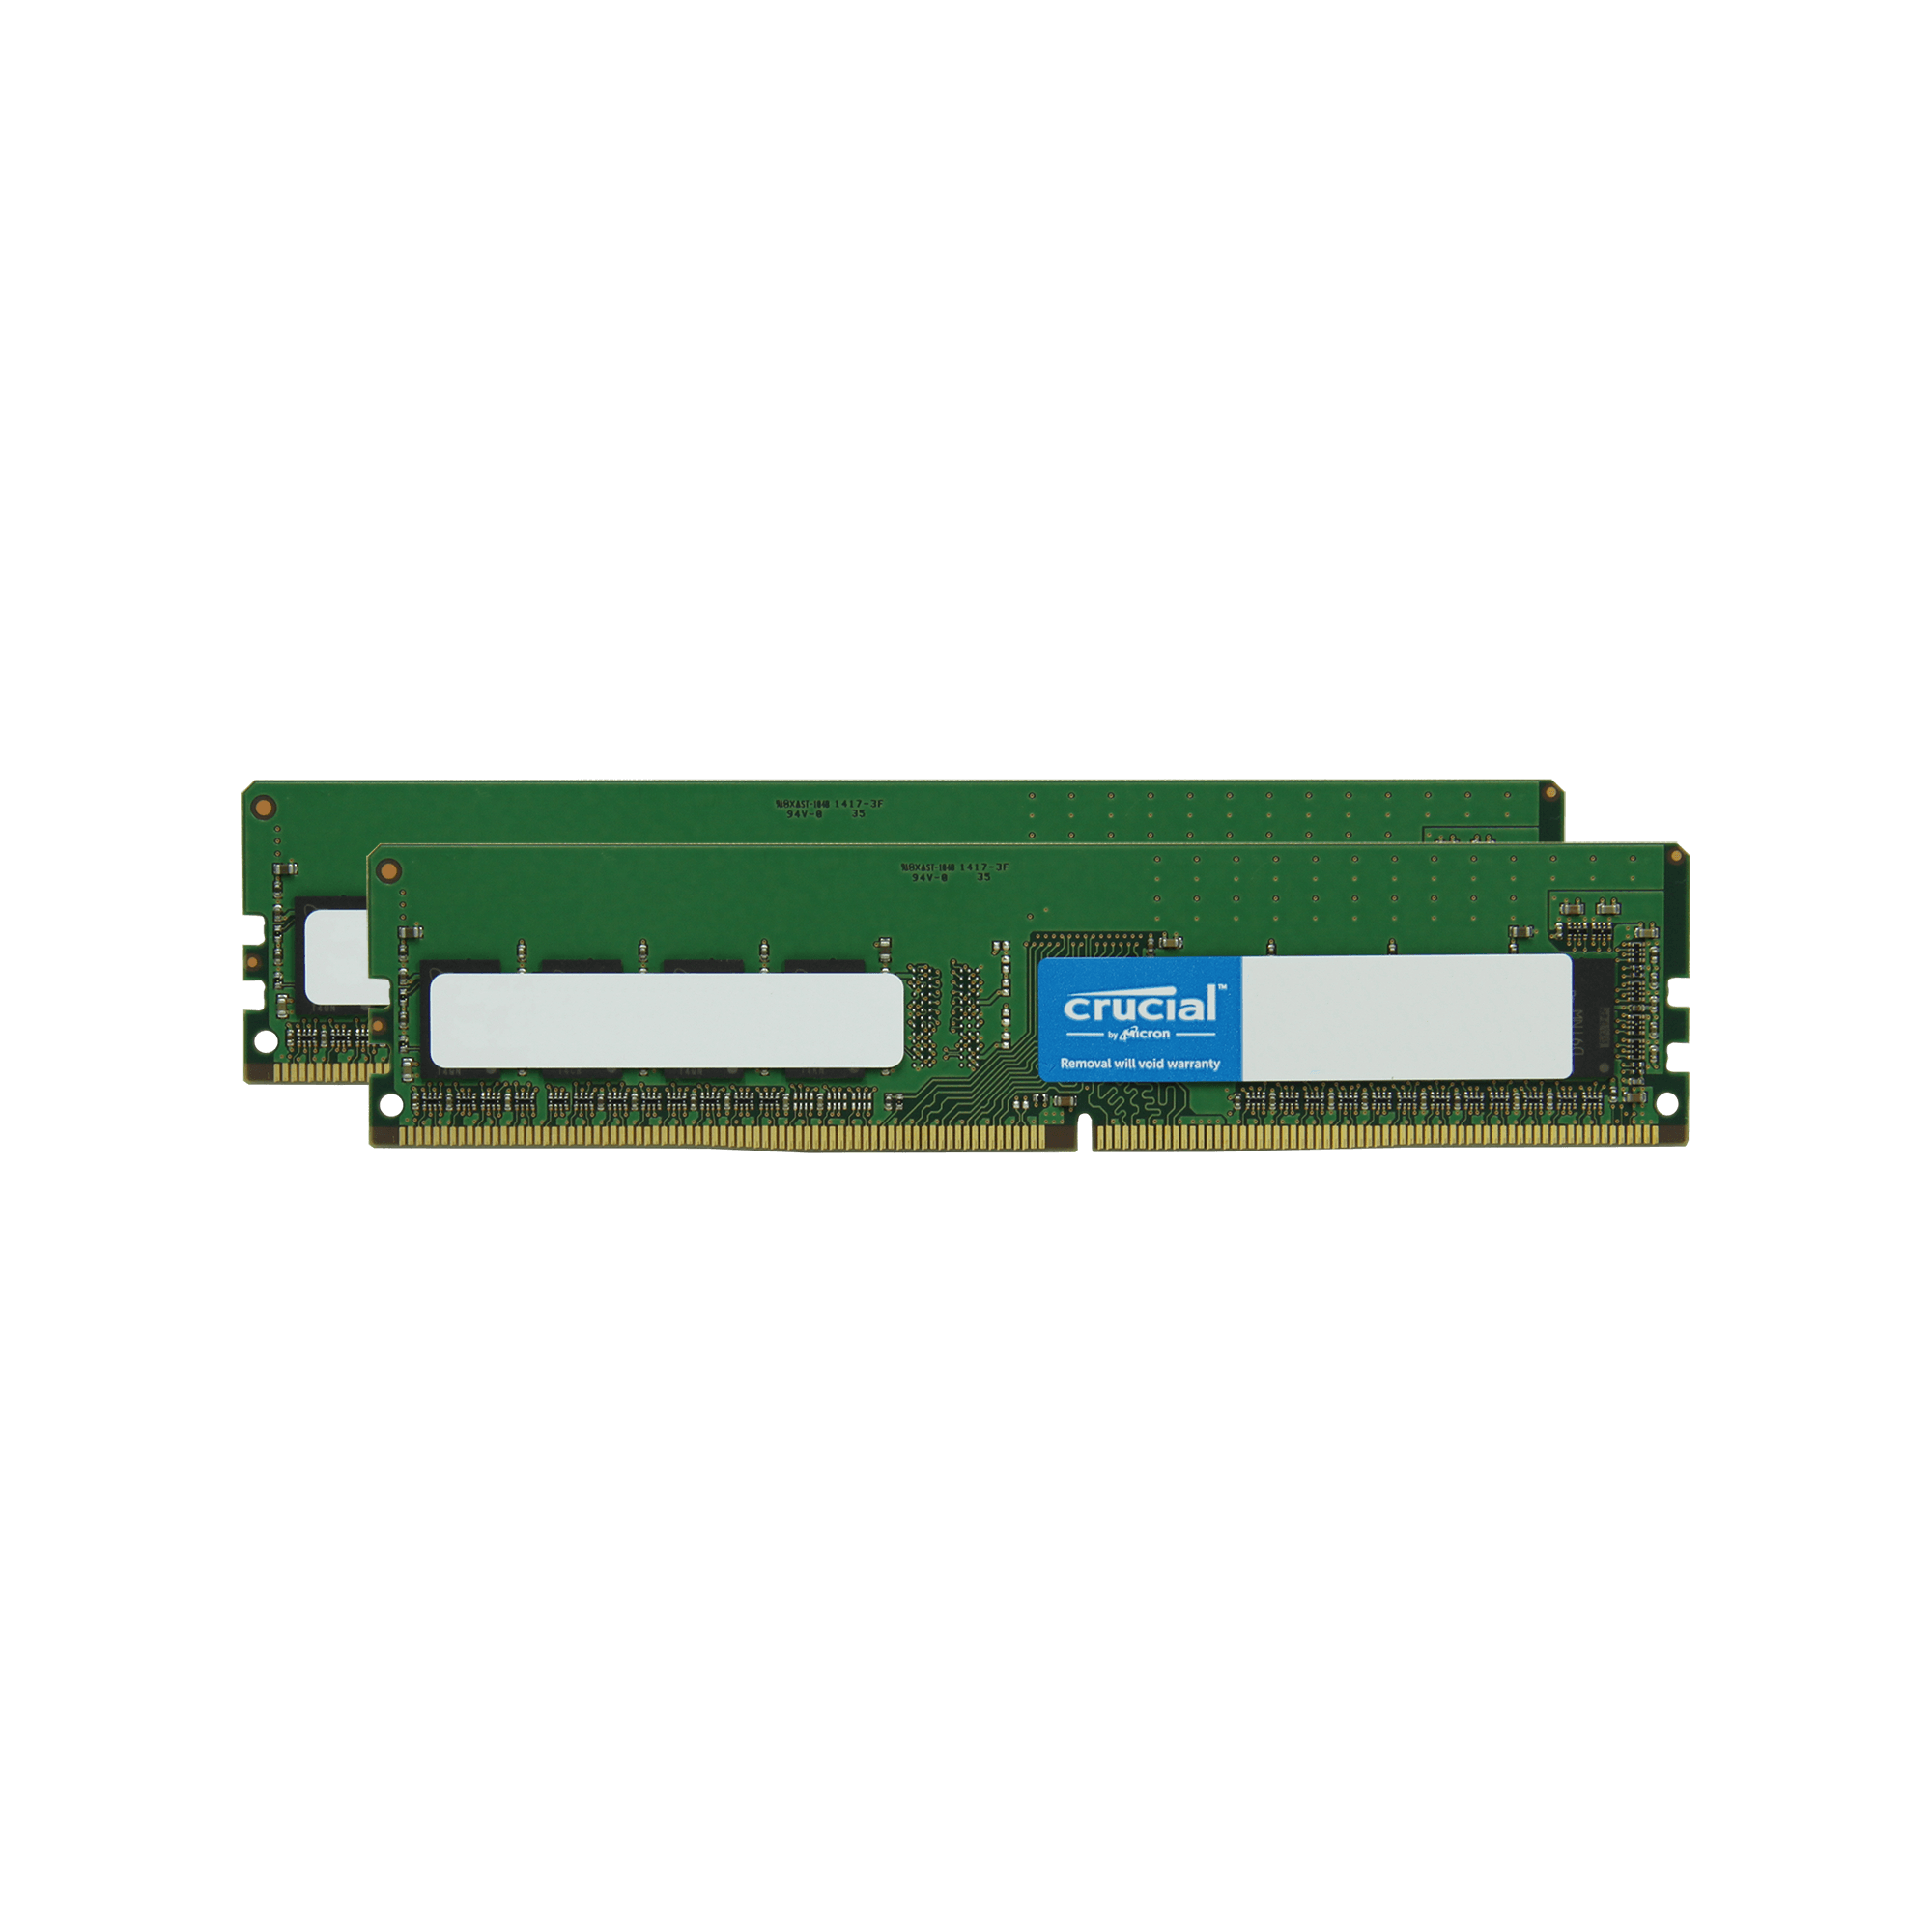 PCパーツメモリ 8GB 2枚組 CFD Selection W4U2666CM-8G